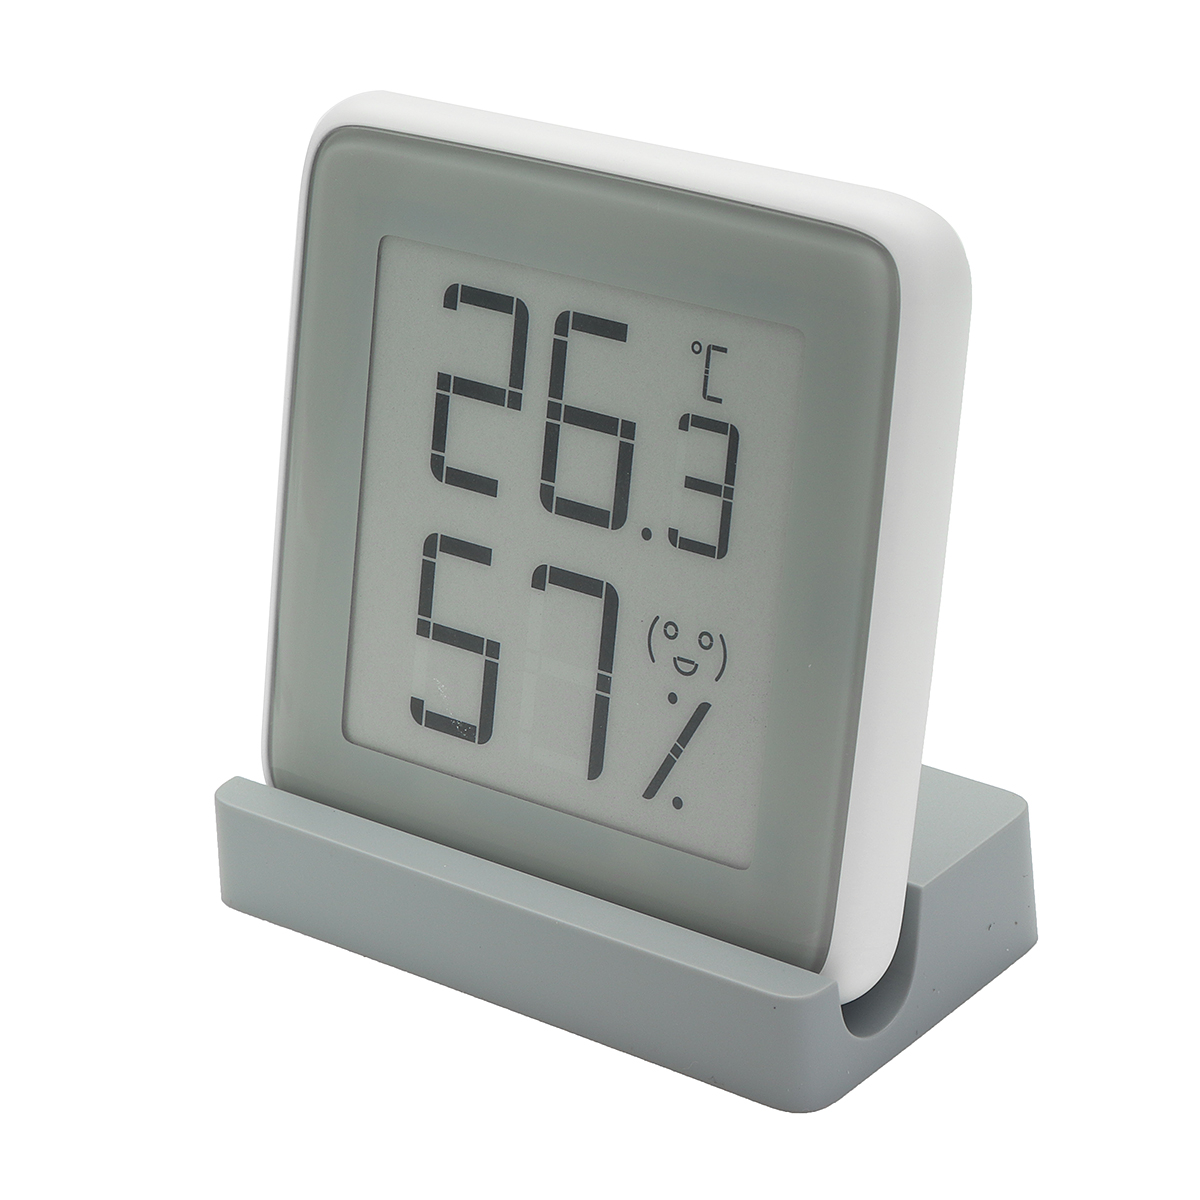 Mini-Digital-Thermometer-Humidity-Meter-Room-Temperature-Indoor-Hygrometer-LCD-1319357-8